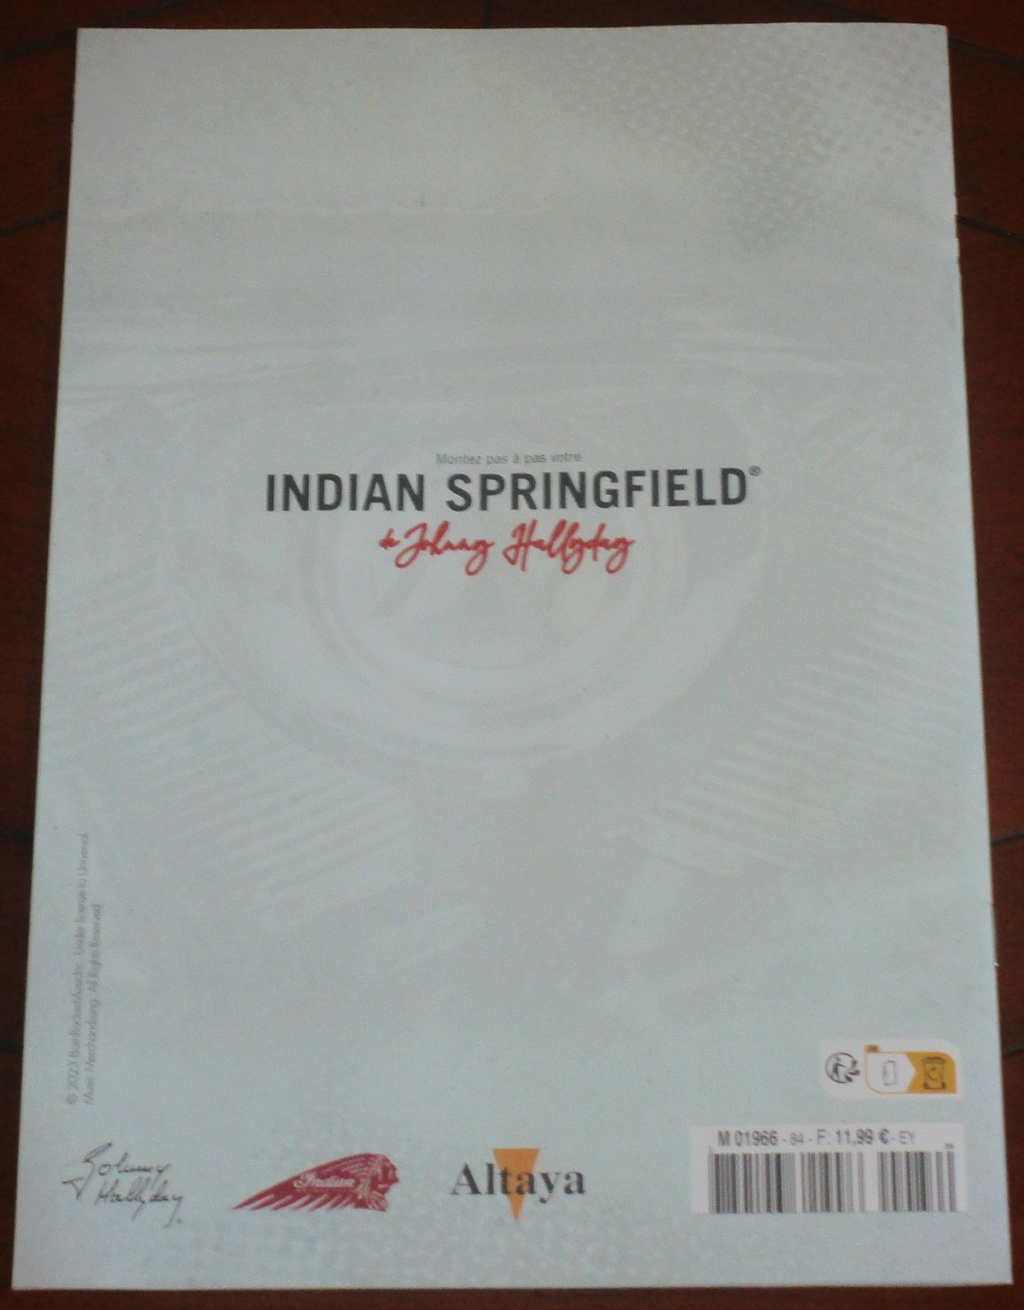 Altaya:Indian Springfield de JH n°84 020-a229